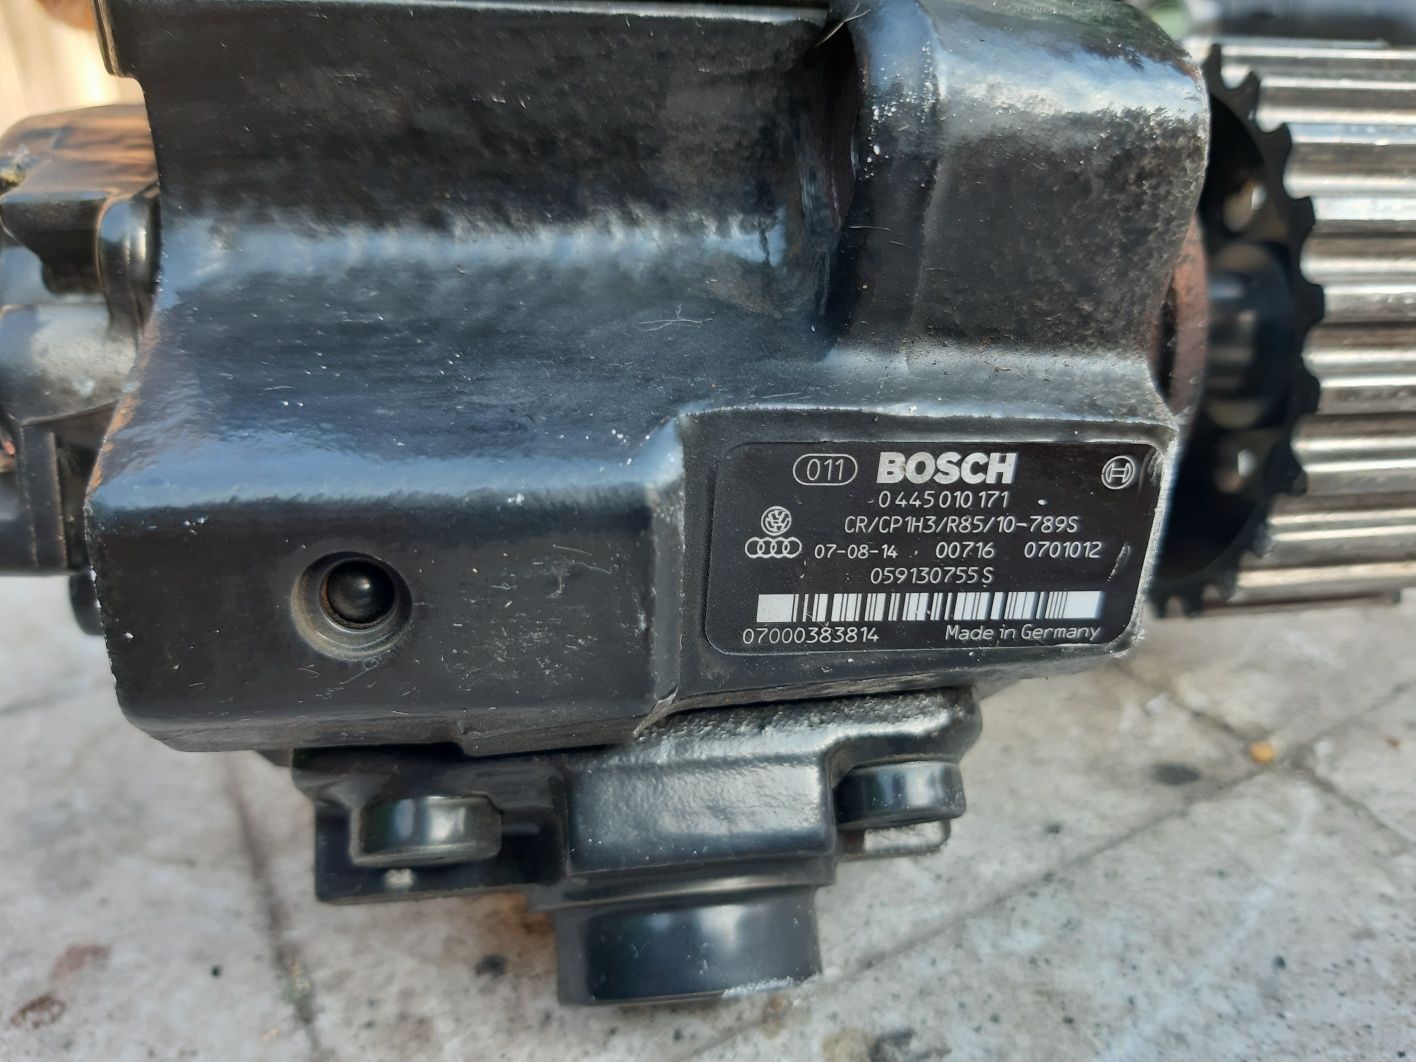 Pompa injectie/înalta presiune Audi 2,7 3,0 tdi cod059 130 755S Bosch